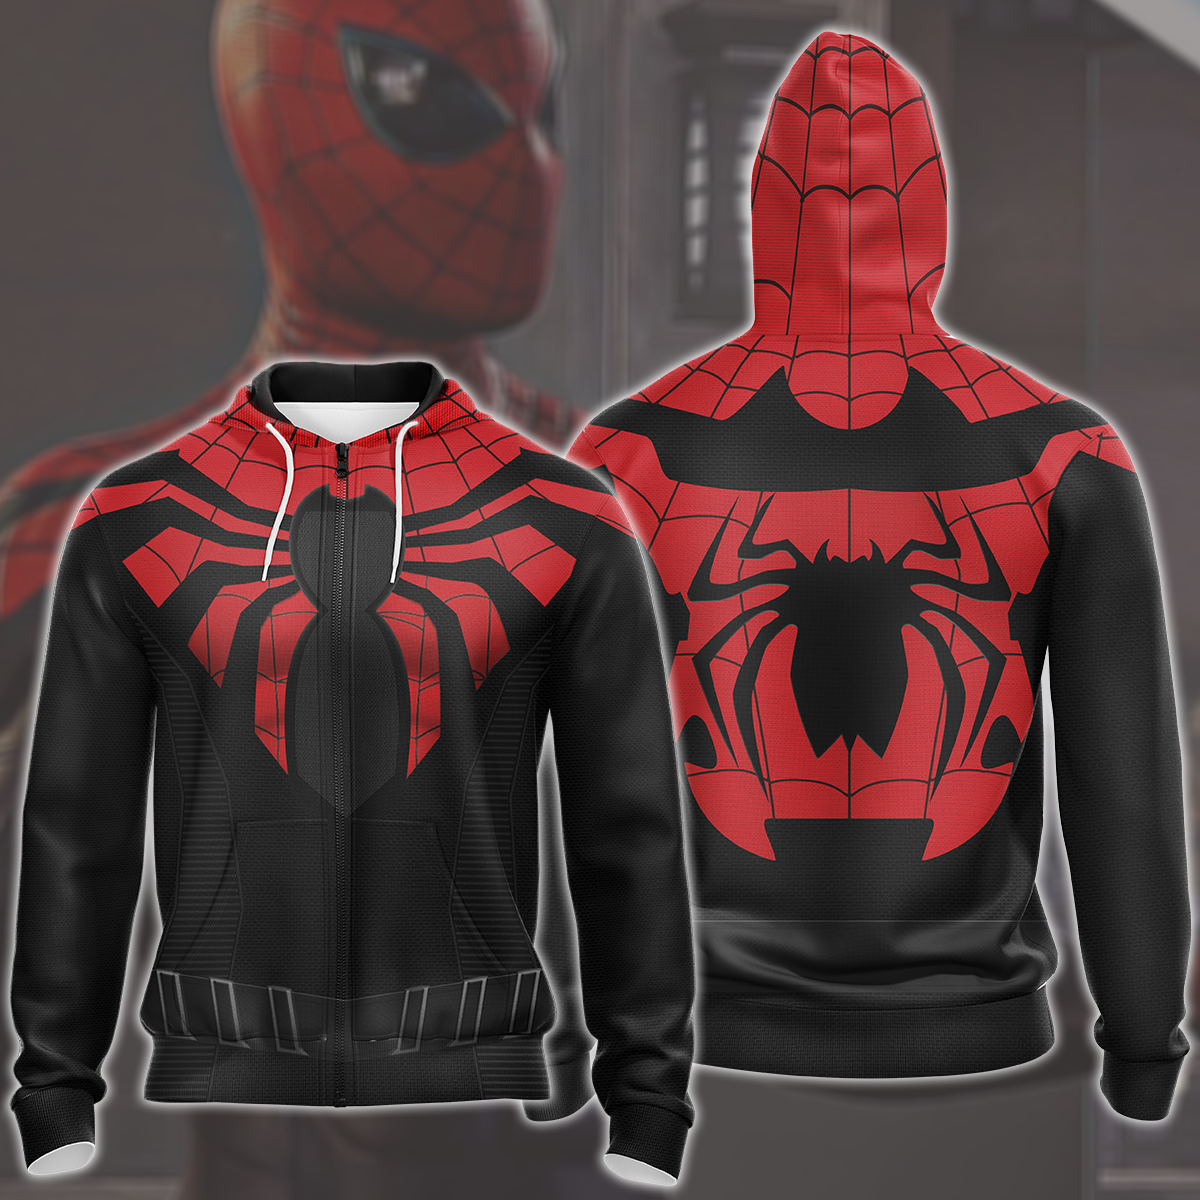 Spider-Man 2 Peter Parker Superior Suit Cosplay Video Game All Over Printed T-shirt Tank Top Zip Hoodie Pullover Hoodie Hawaiian Shirt Beach Shorts Joggers 1 Zip Hoodie S